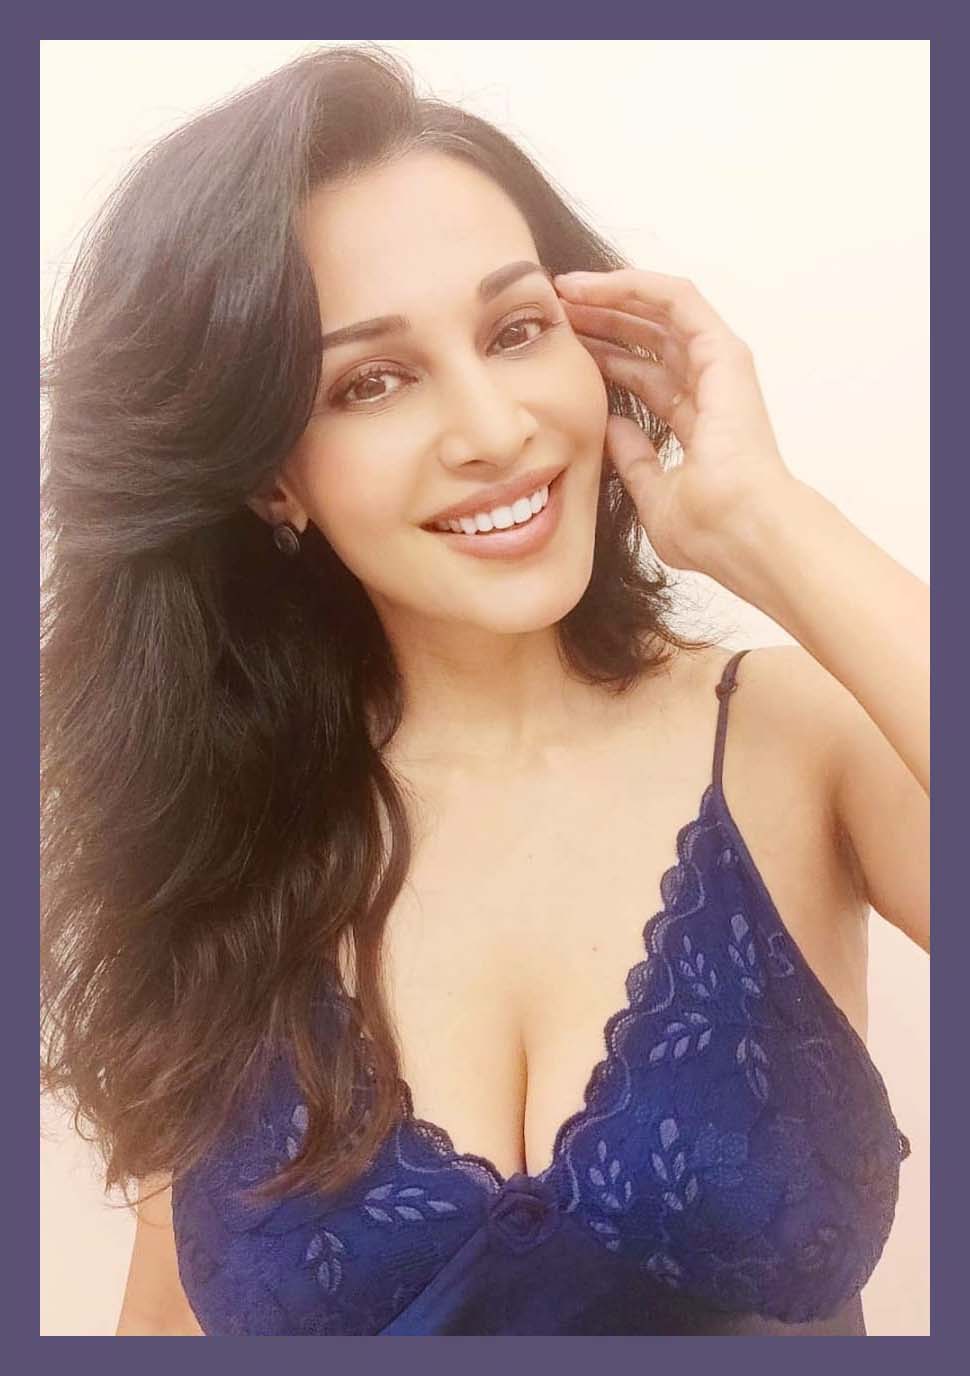 Asha Saini Xxx Sex Videos Hd Com - Flora Saini-Asha Saini-Flora Kaur Saini-Indian-Female-Hindi-Kannada-Tamil-Punjabi-Film-Actress-Bollywood-Model-  à¤«à¥à¤²à¥‹à¤°à¤¾ à¤¸à¥ˆà¤¨à¥€-à¤†à¤¶à¤¾ à¤¸à¥ˆà¤¨à¥€-à¤«à¥à¤²à¥‹à¤°à¤¾ à¤•à¥Œà¤° à¤¸à¥ˆà¤¨à¥€-à¤­à¤¾à¤°à¤¤à¥€à¤¯-à¤®à¤¹à¤¿à¤²à¤¾-à¤¹à¤¿à¤‚à